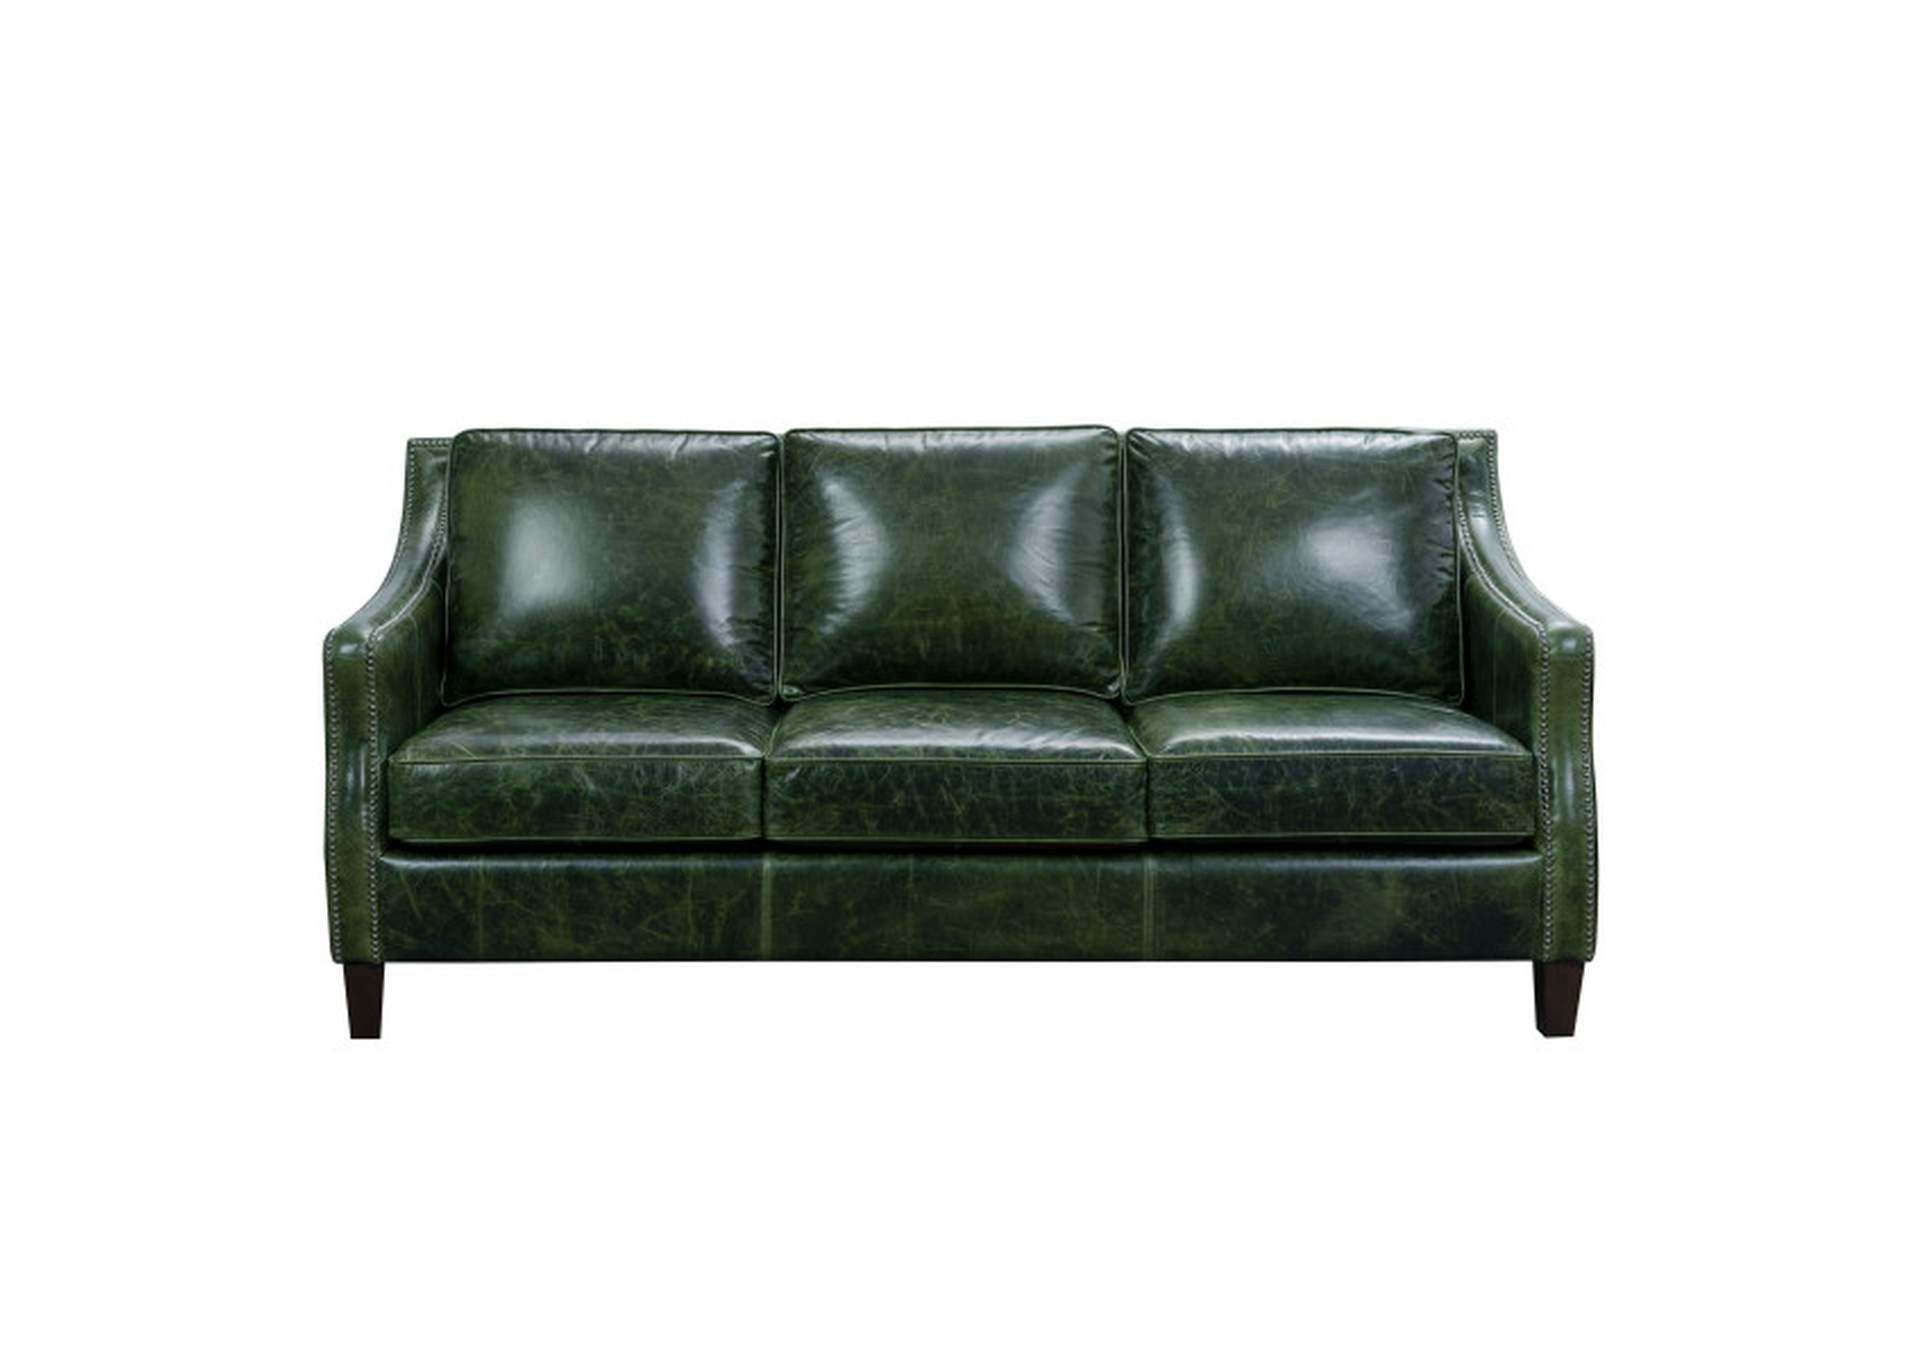 Miles Top Grain Leather Sofa in Fescue Green,Pulaski Furniture